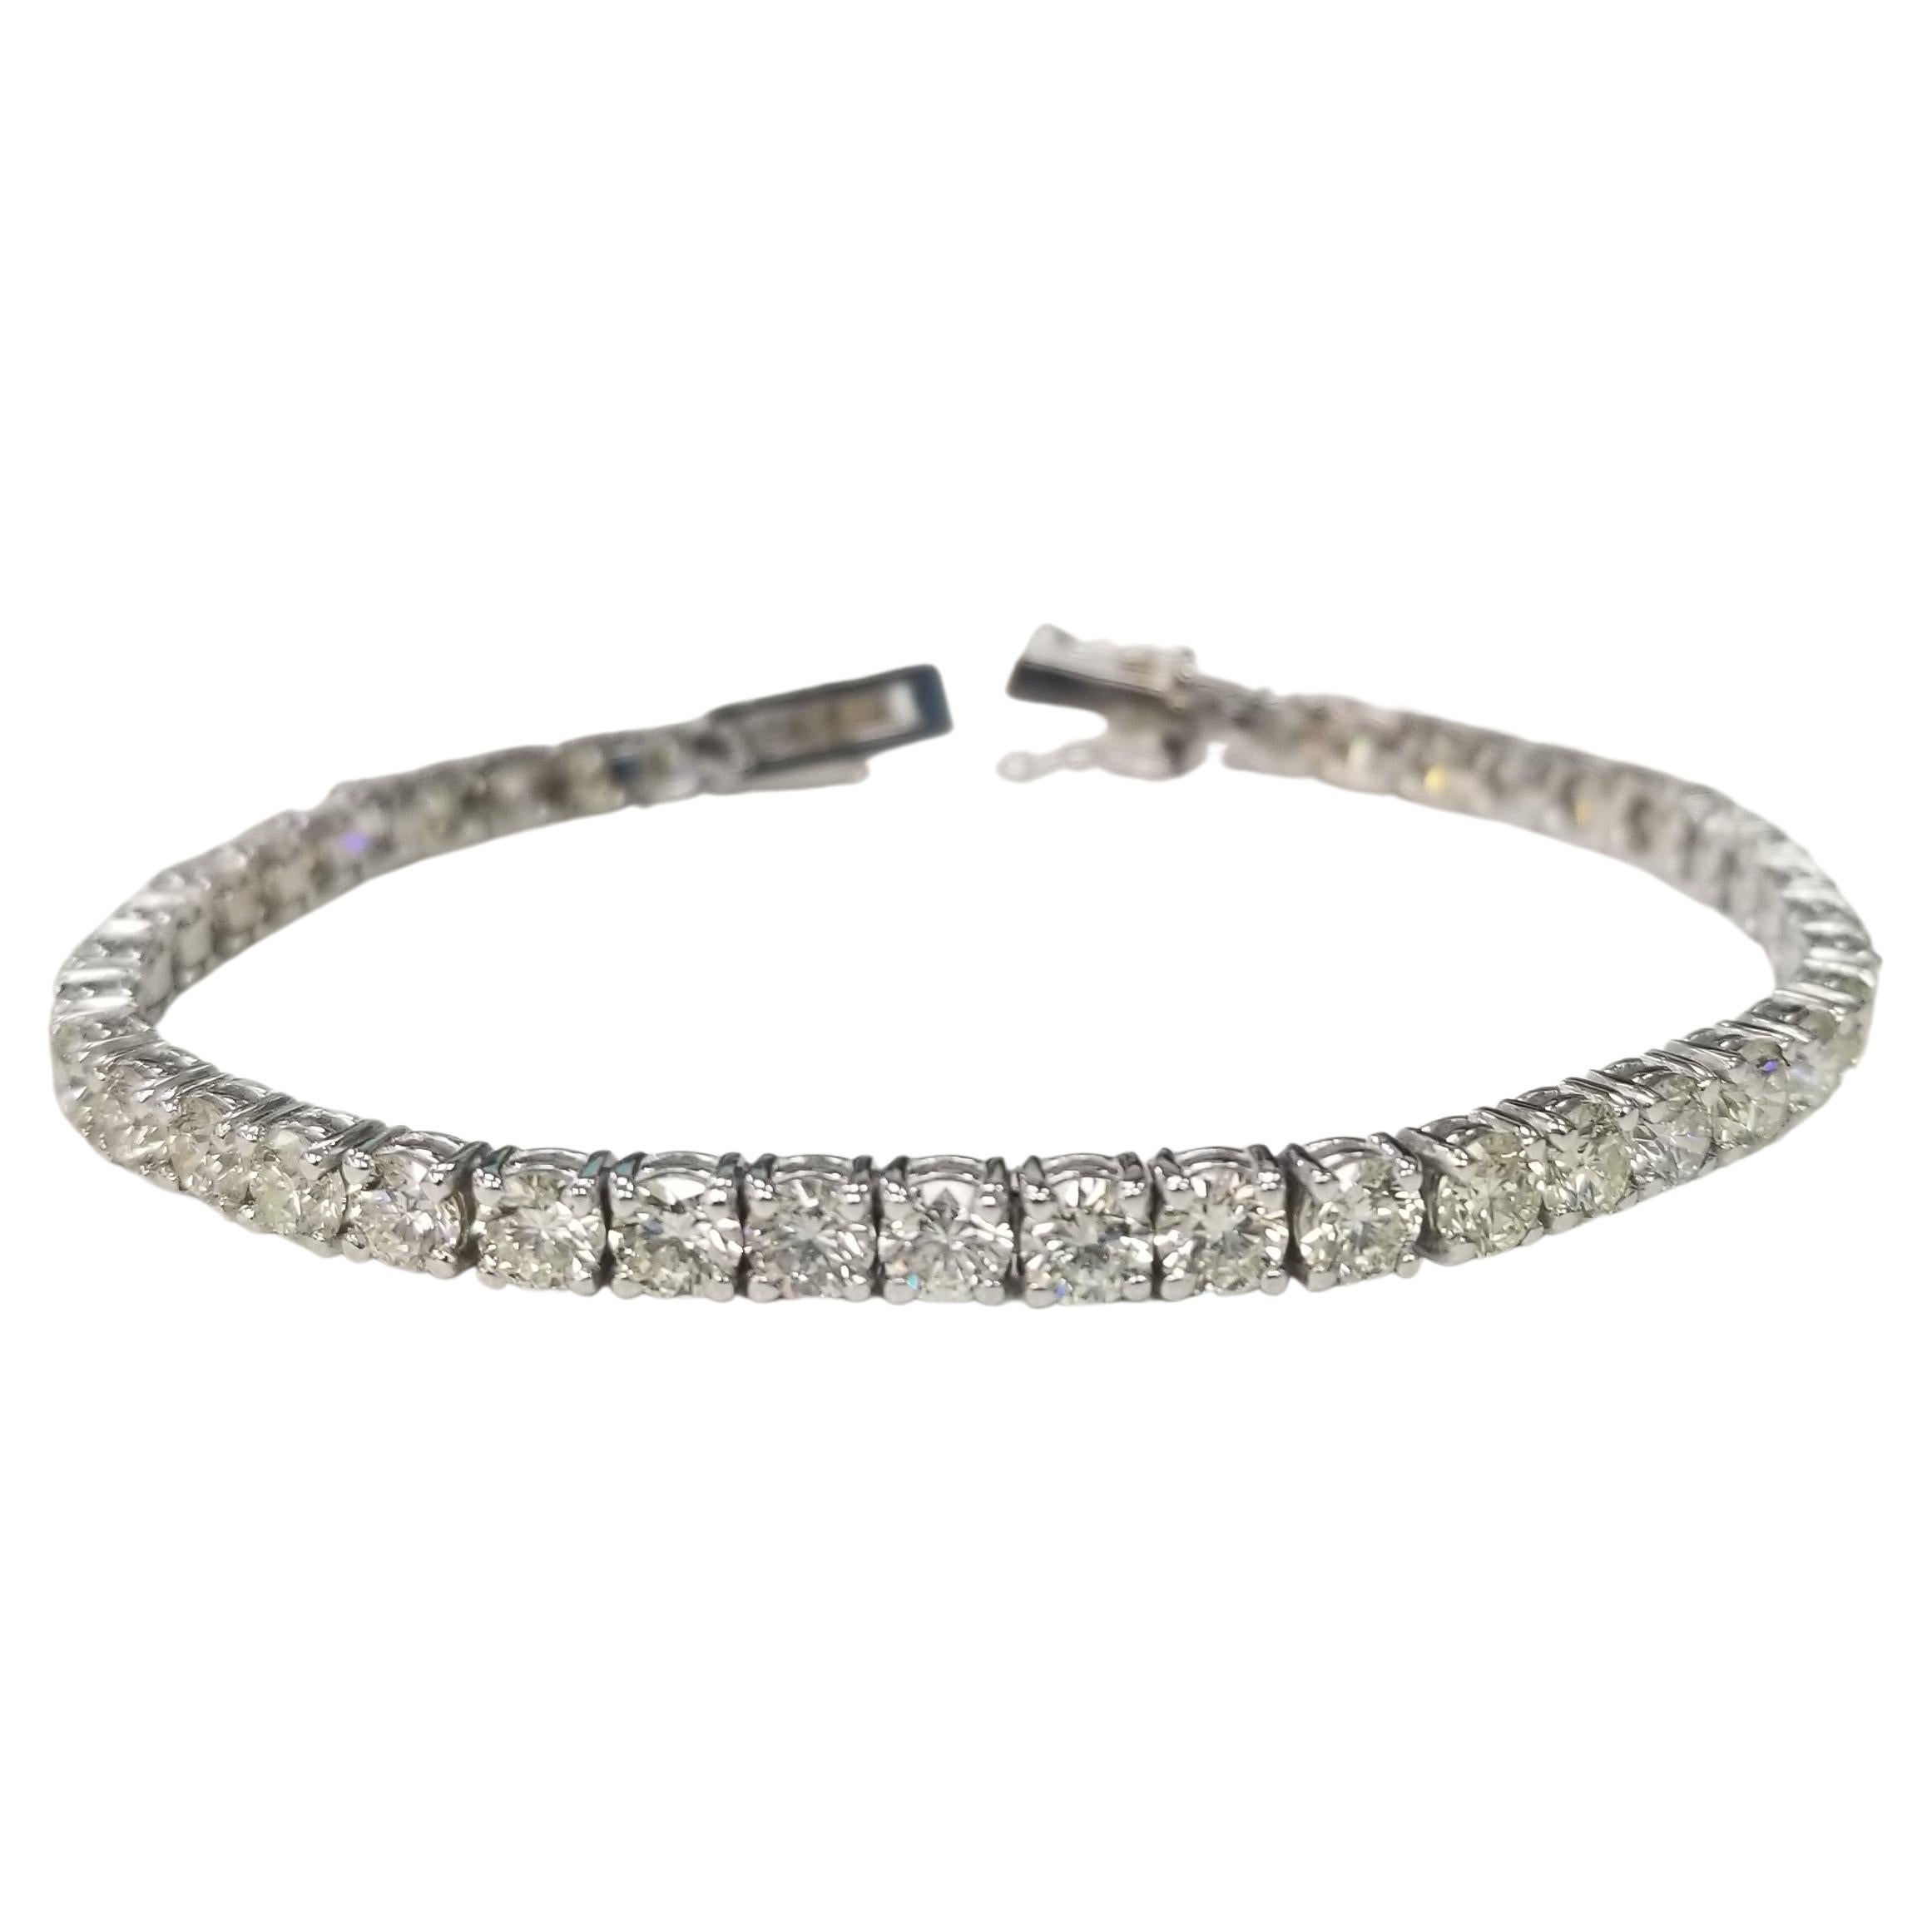 Diamond Tennis Bracelet with 9.51 carats set in 14k white gold setting